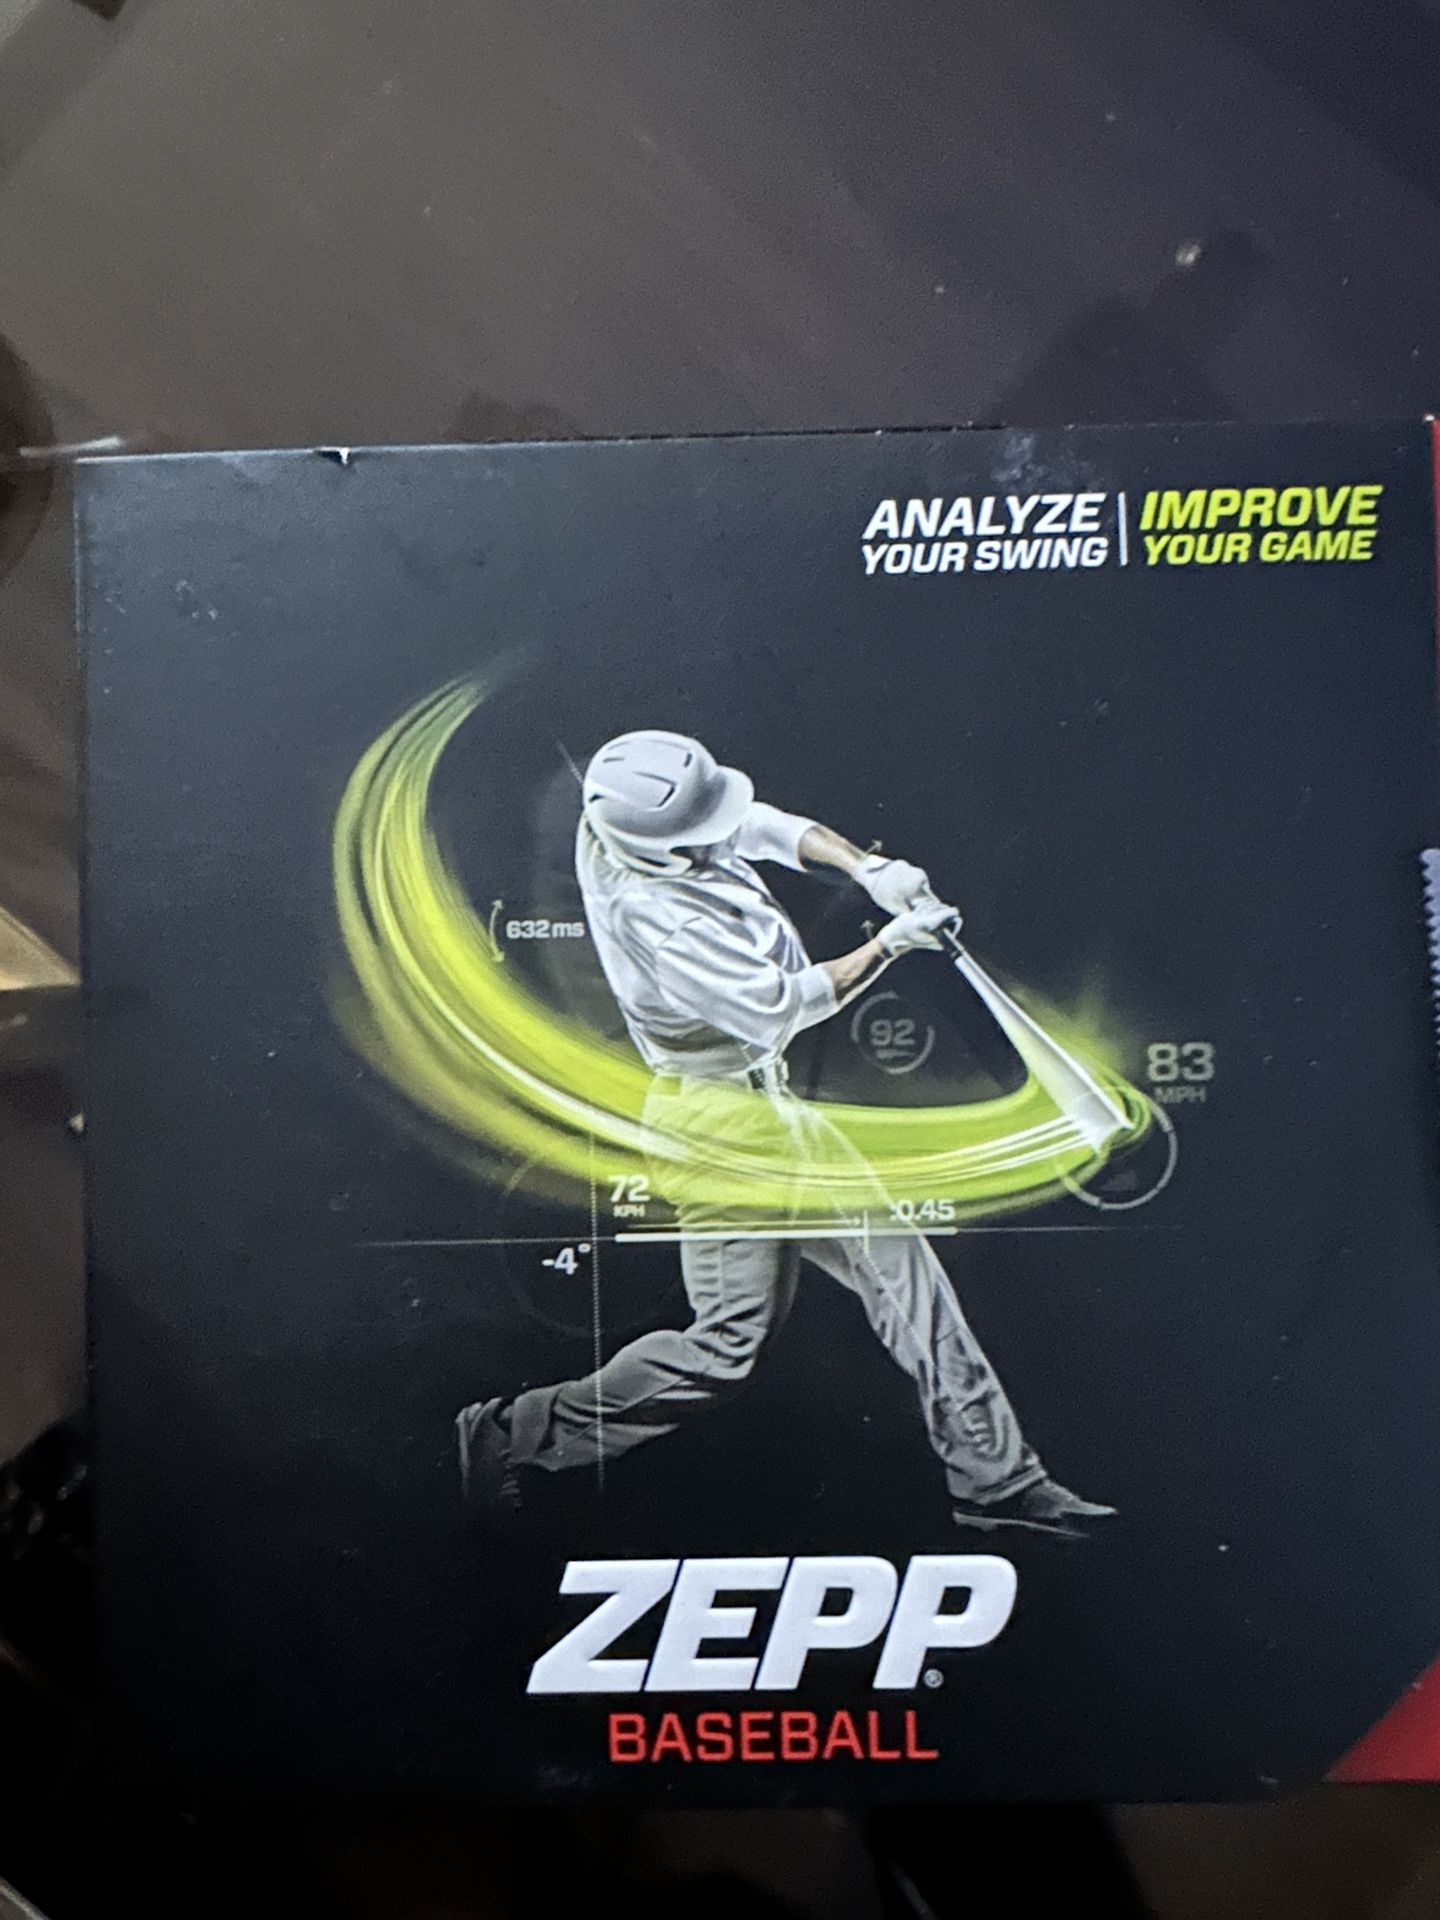 Zepp Baseball Swing Analyzer